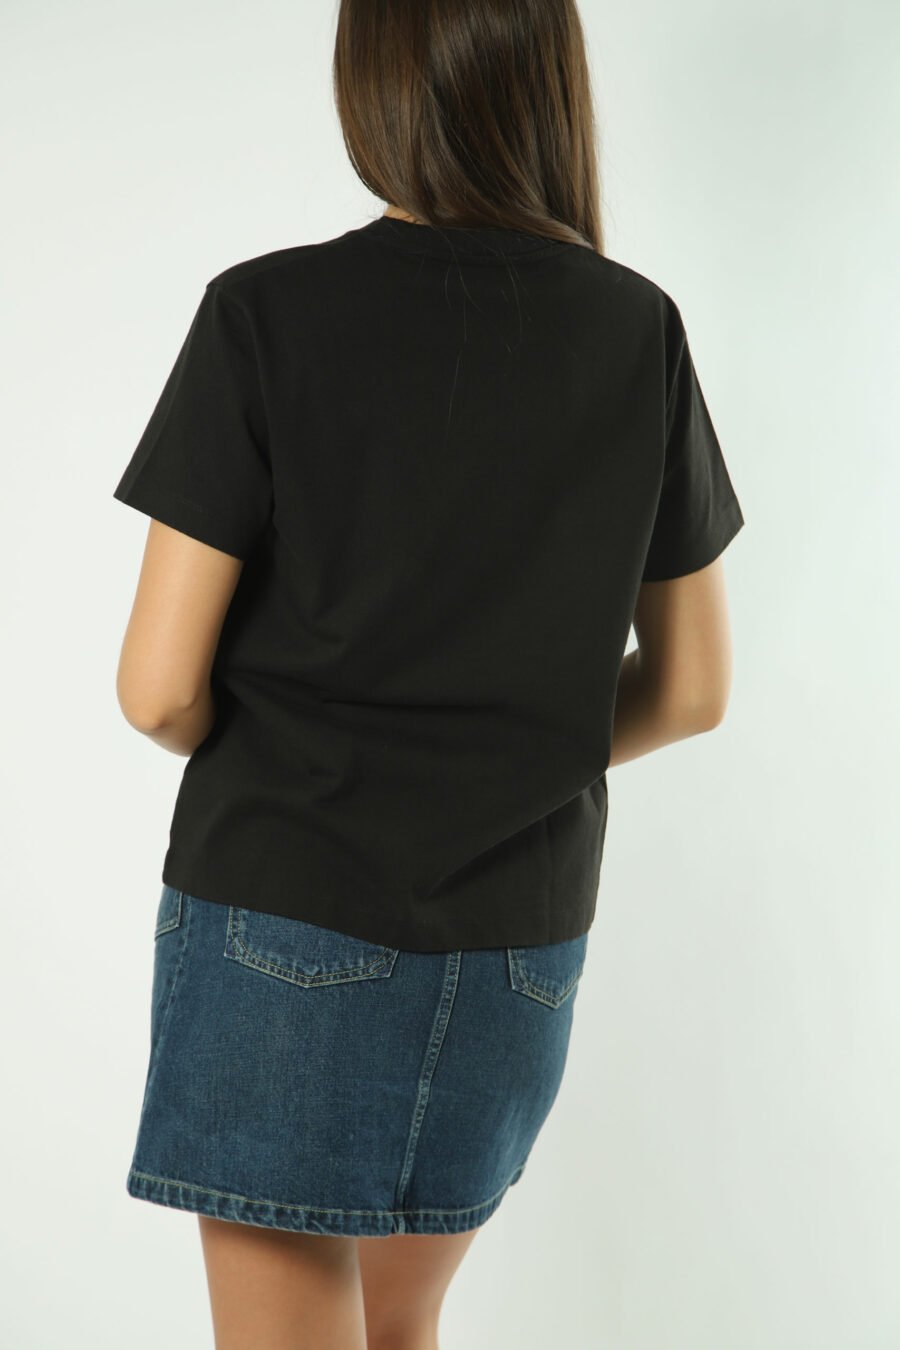 Camiseta negra con maxilogo naranja "paris" - Photos 1317